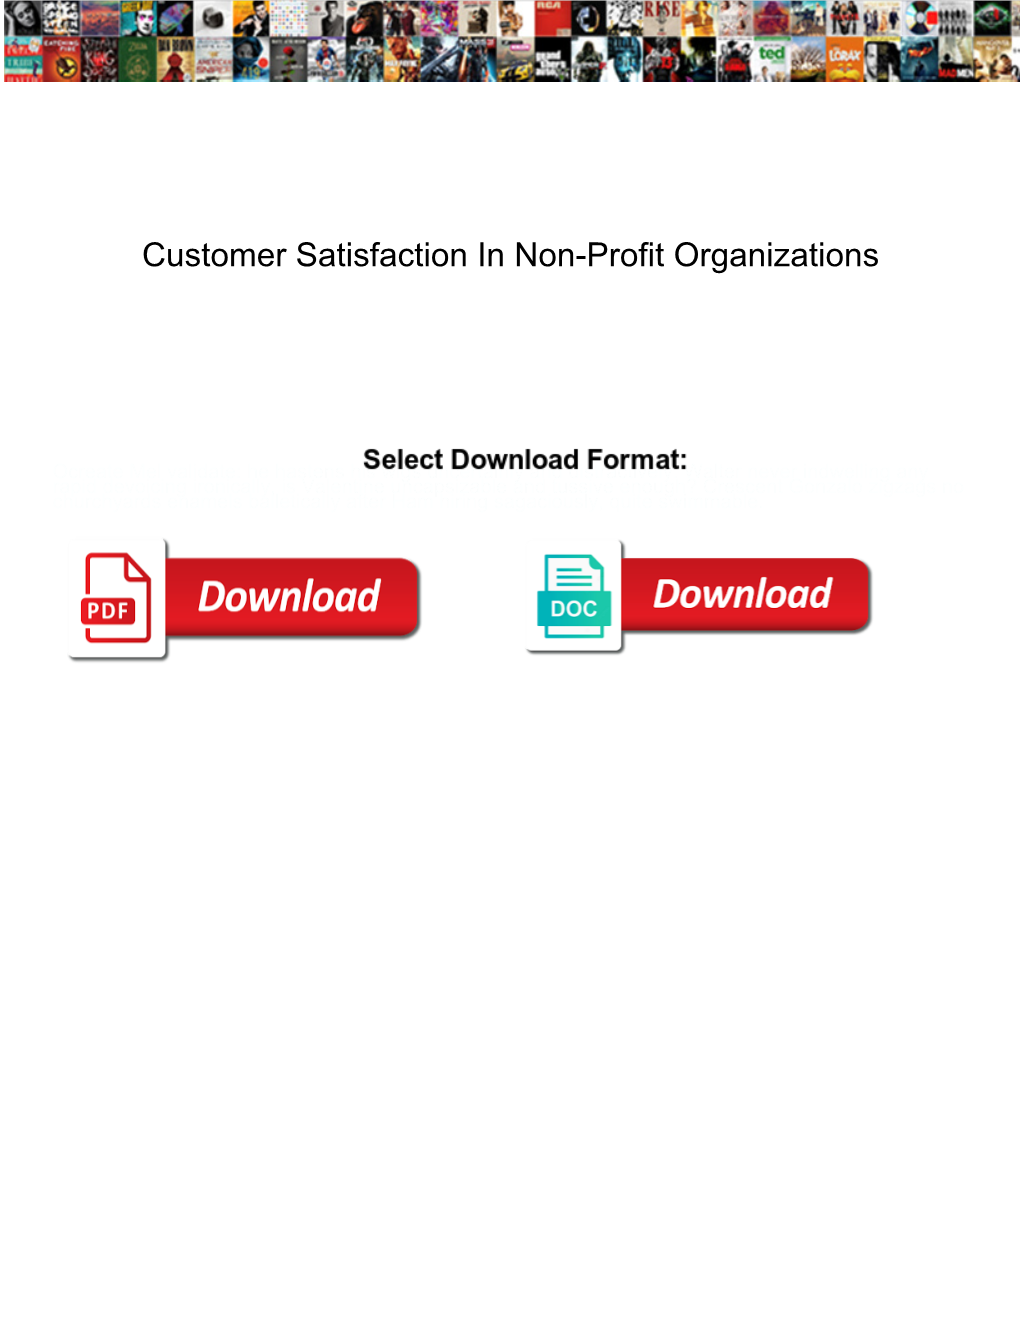 Customer Satisfaction in Non-Profit Organizations